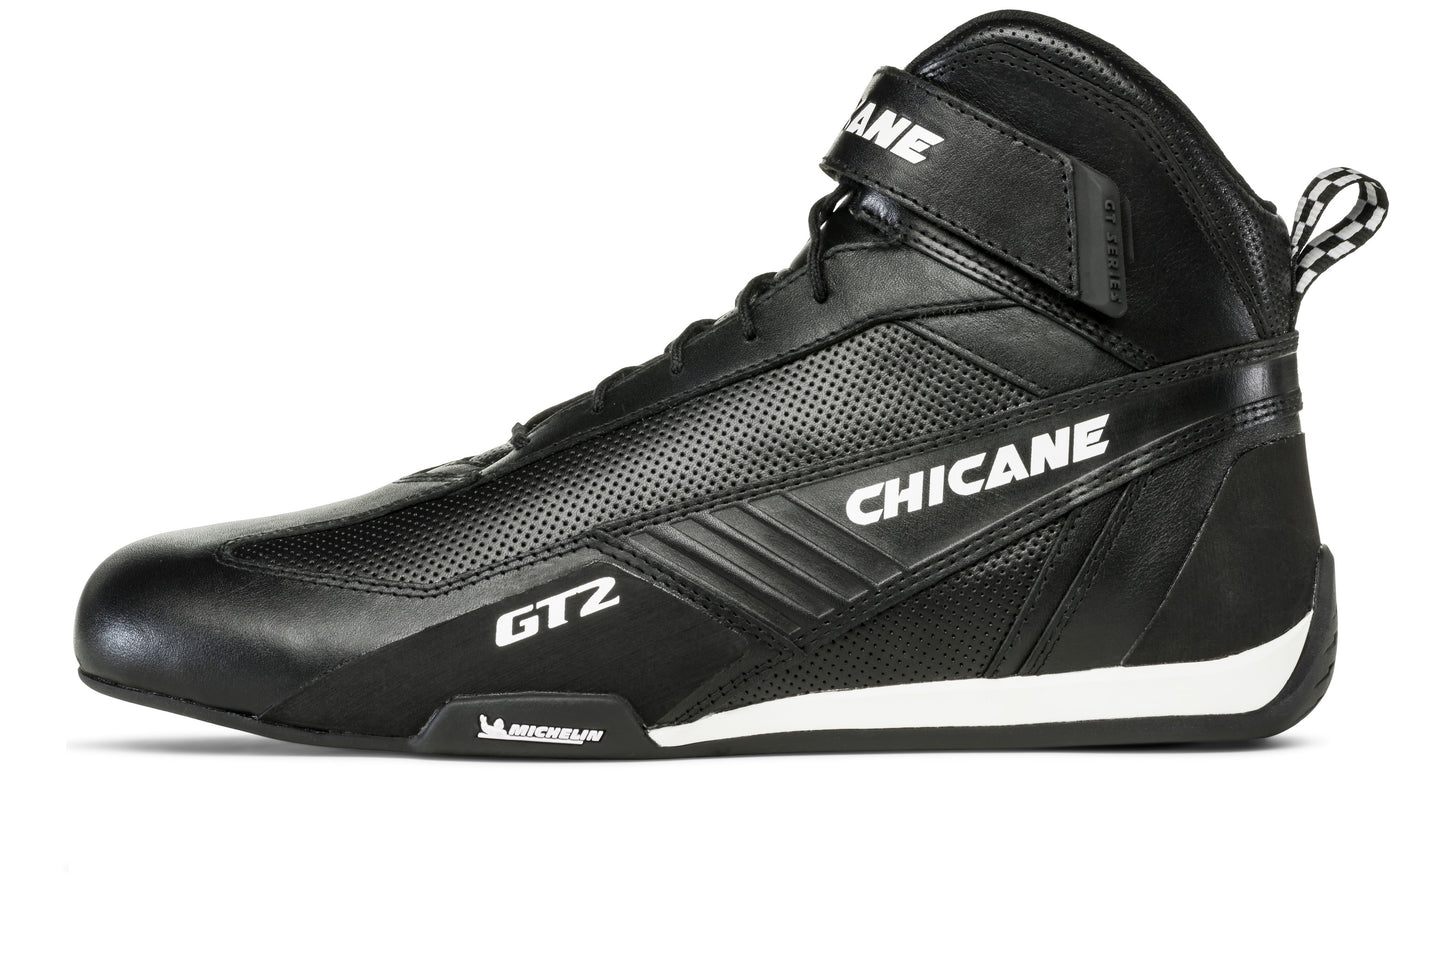 Chicane Men's GT2 - Black